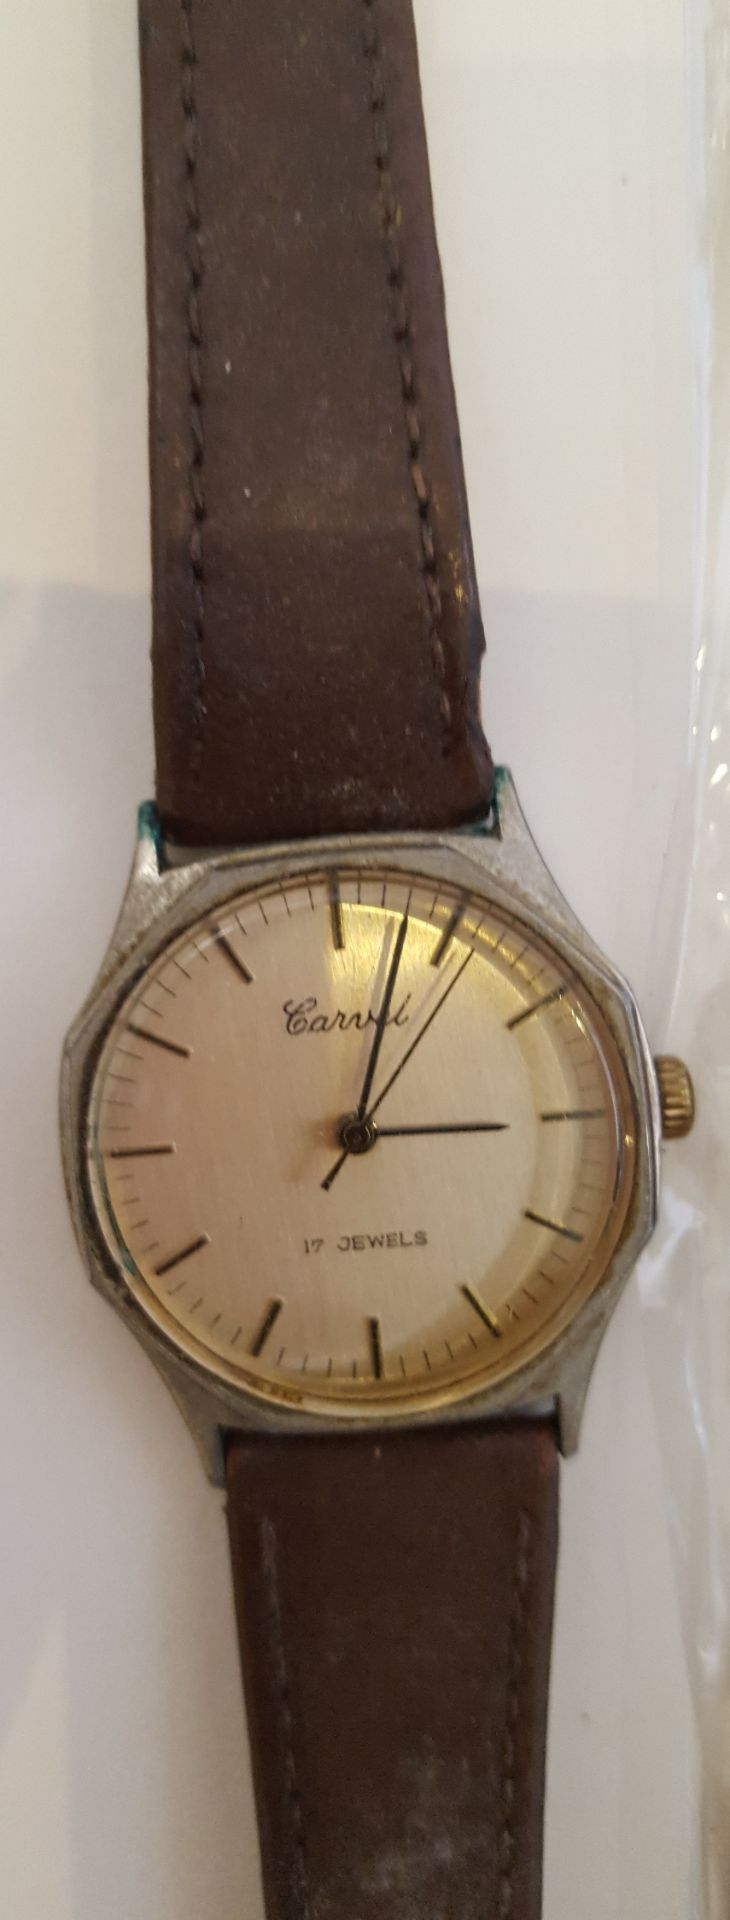 Vintage Wrist Watches 1 x Carvel 17 Jewels 3 x Eiger & 1 x Limit - Image 2 of 4